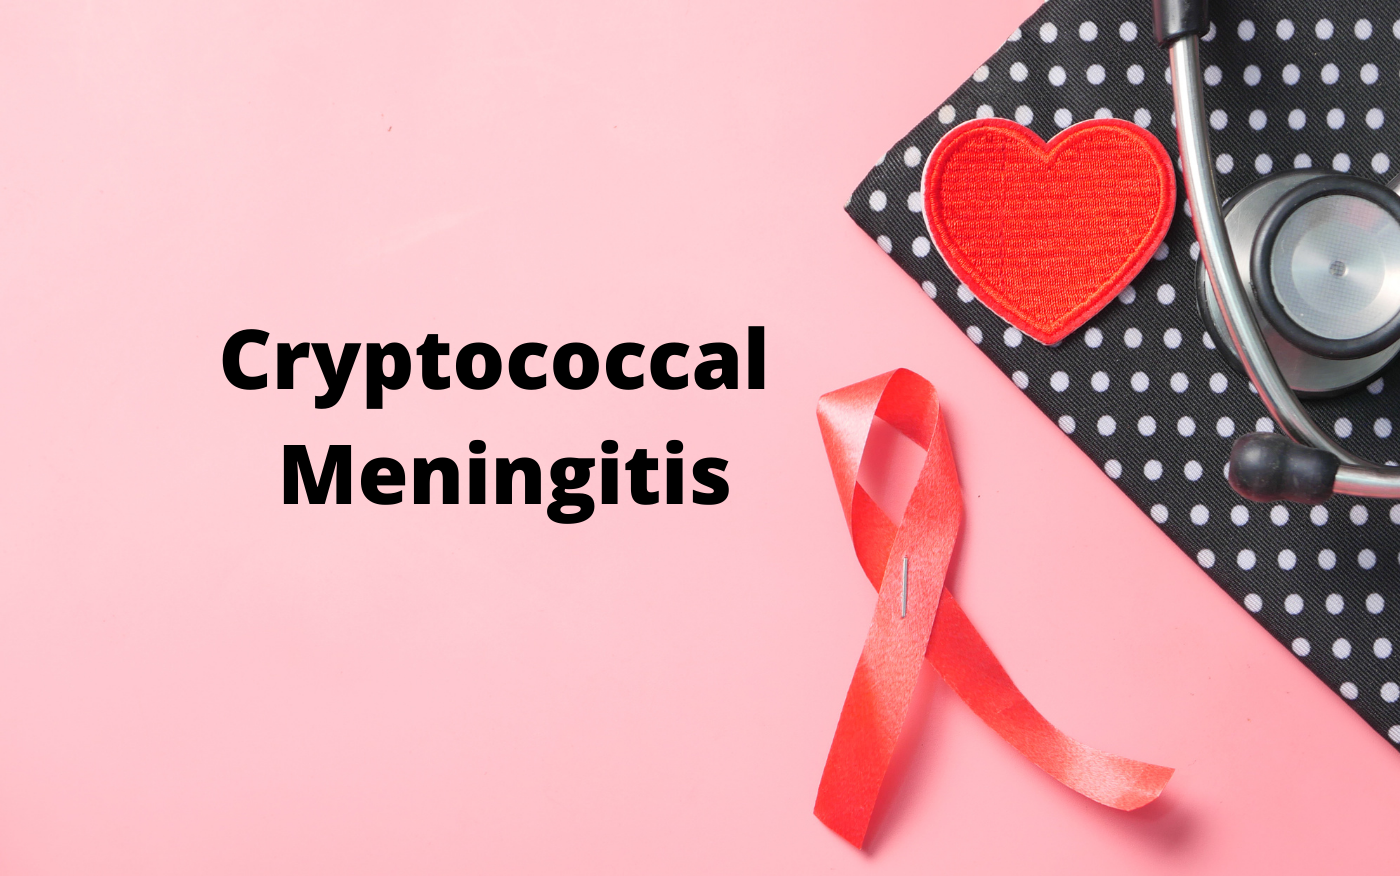 Cryptococcal meningitis